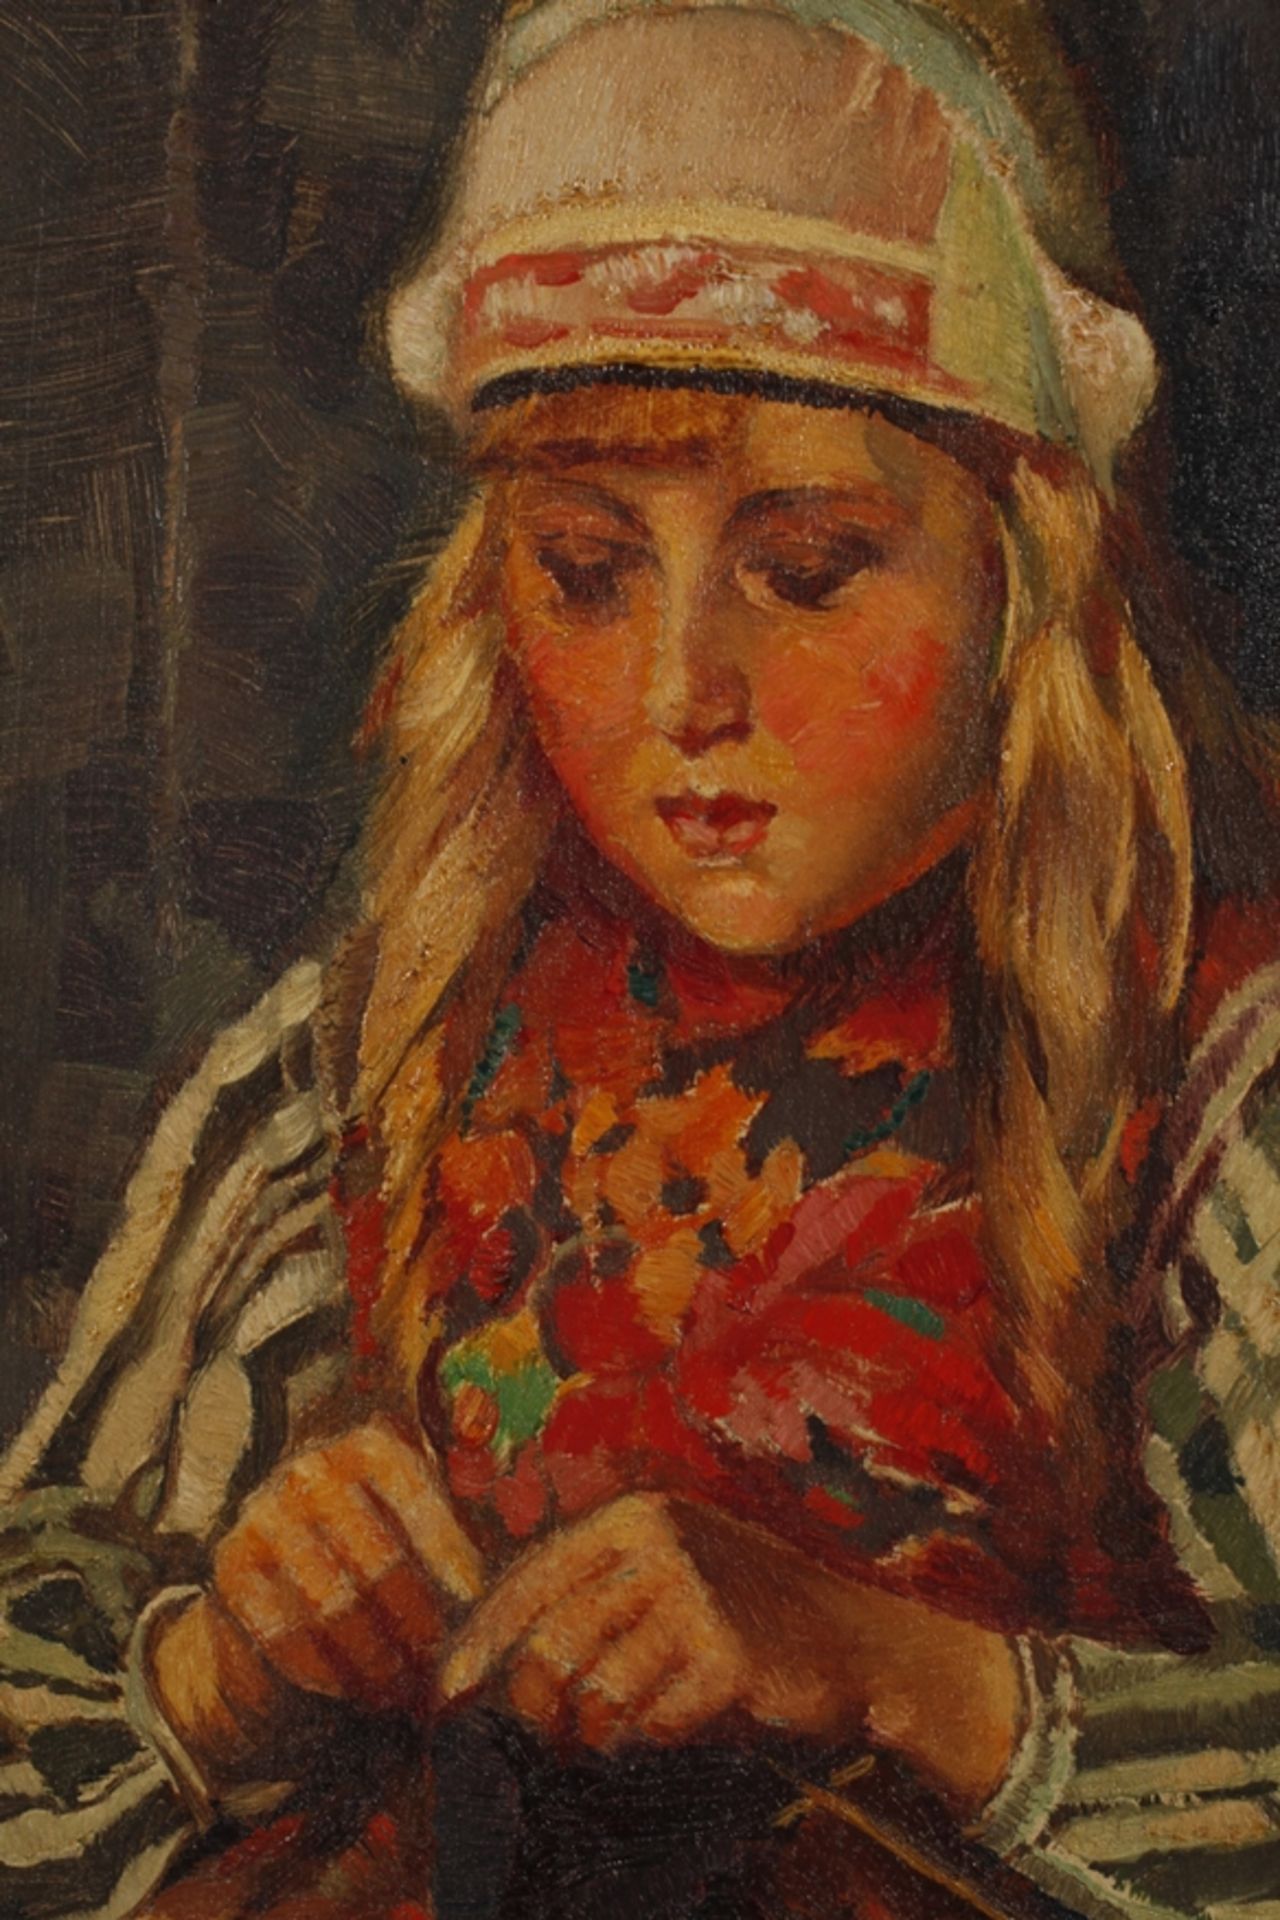 Knitting Dutch peasant girl - Image 4 of 7